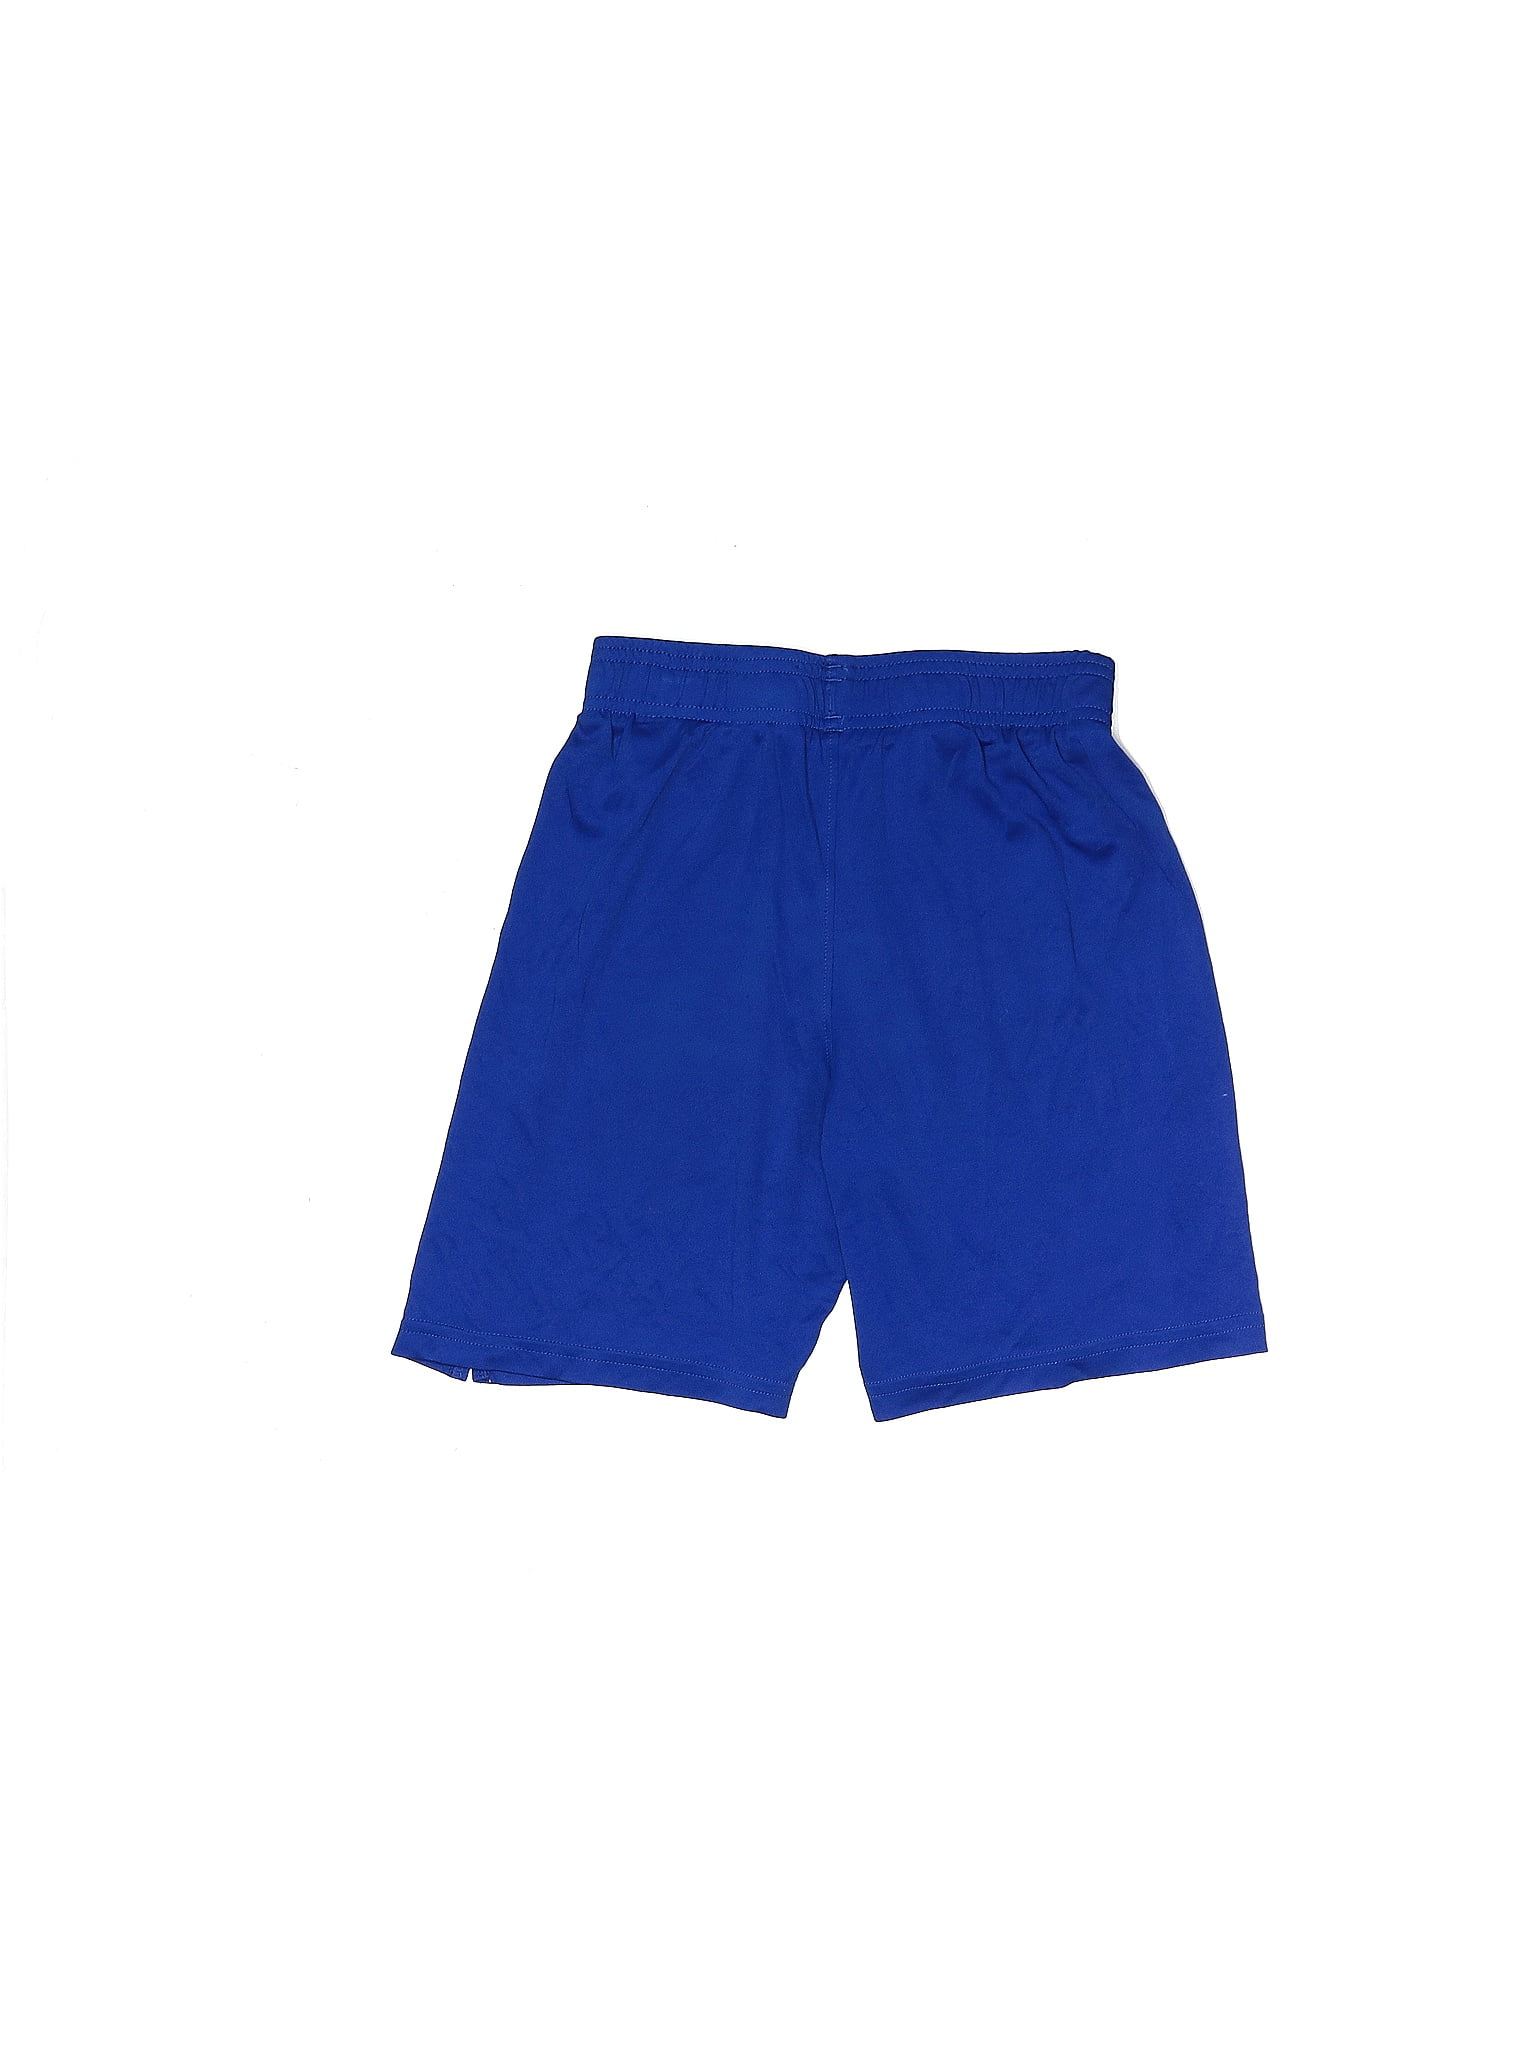 Athletic Works Blue Active Pants Size M - 47% off